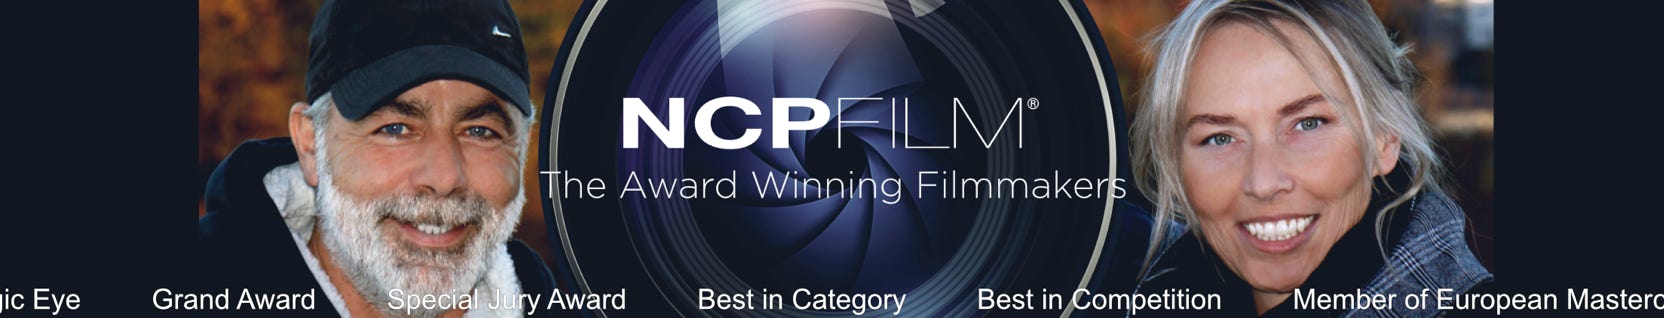 NCP Film Banner